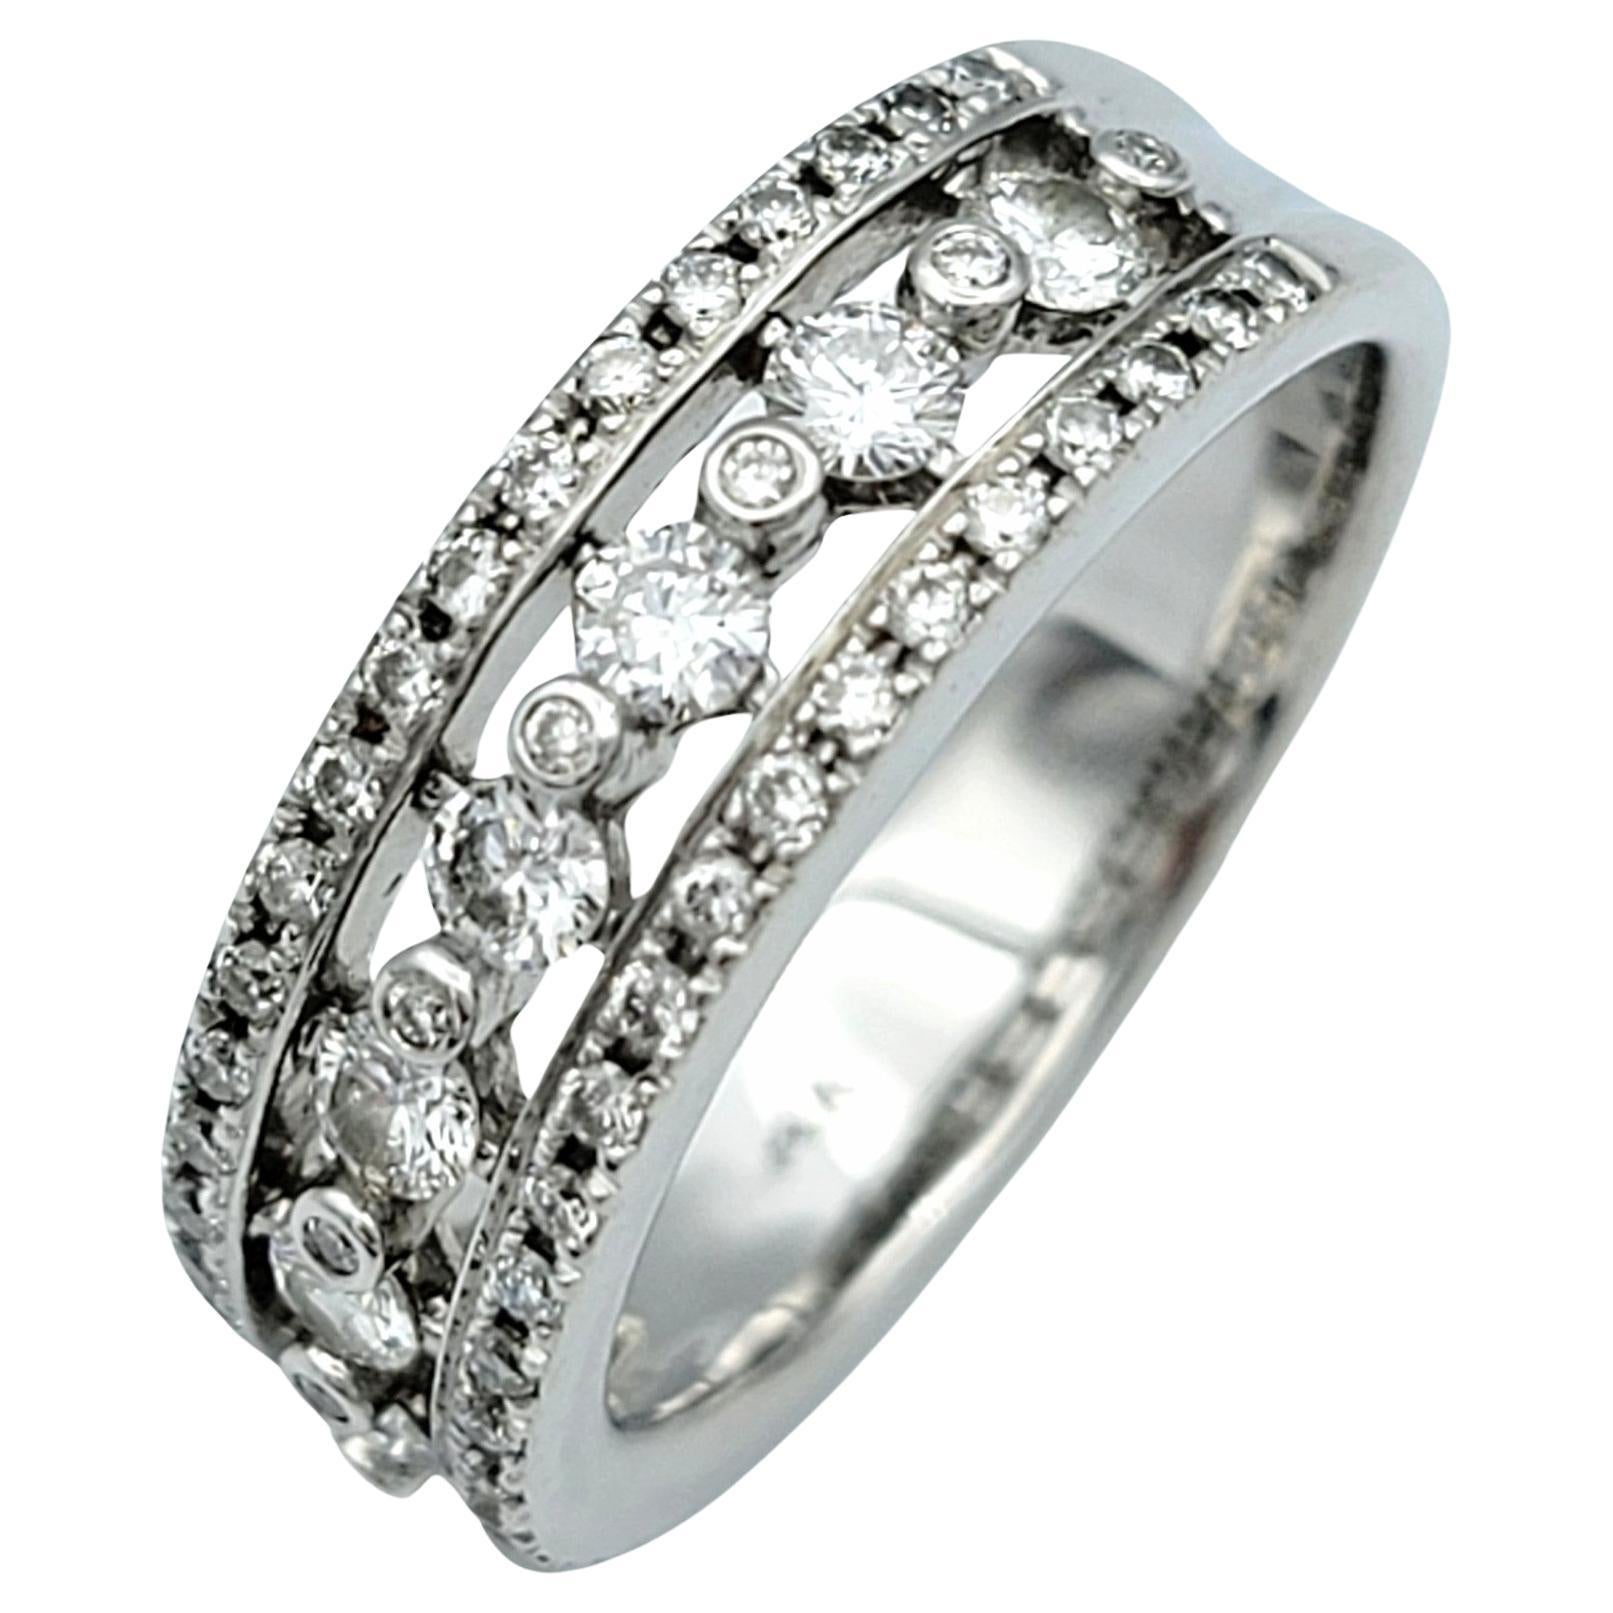 Multi-Row Round Diamond Band Ring Set in Polished 14 Karat White Gold